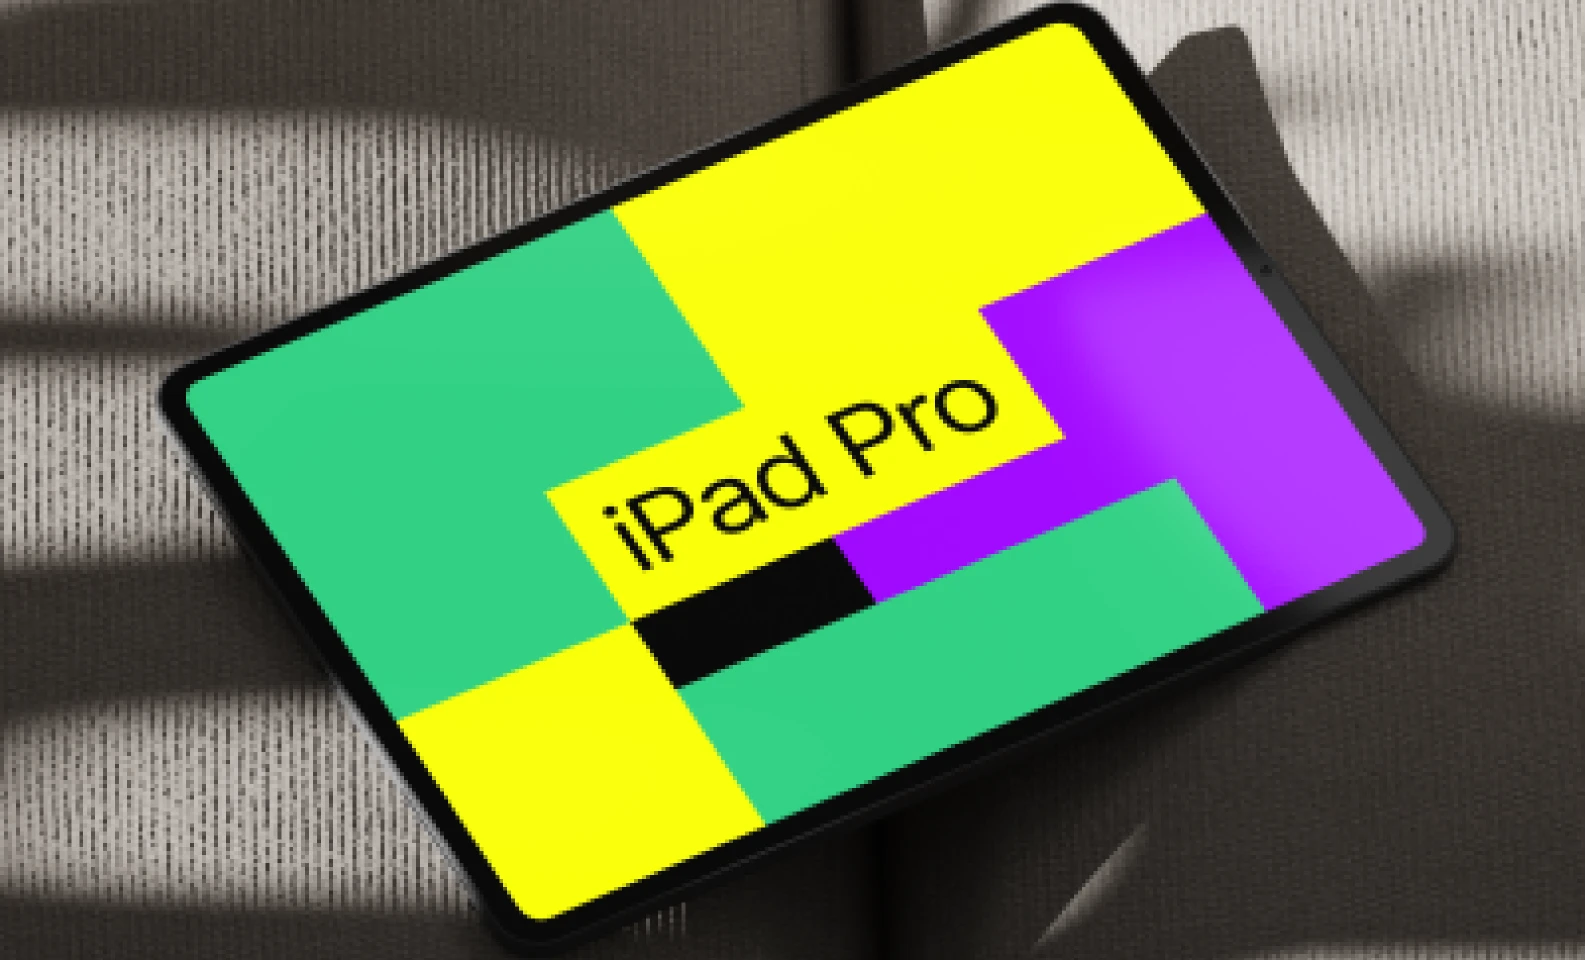 iPad Pro Mockup Free Vol.01 for Figma and Adobe XD